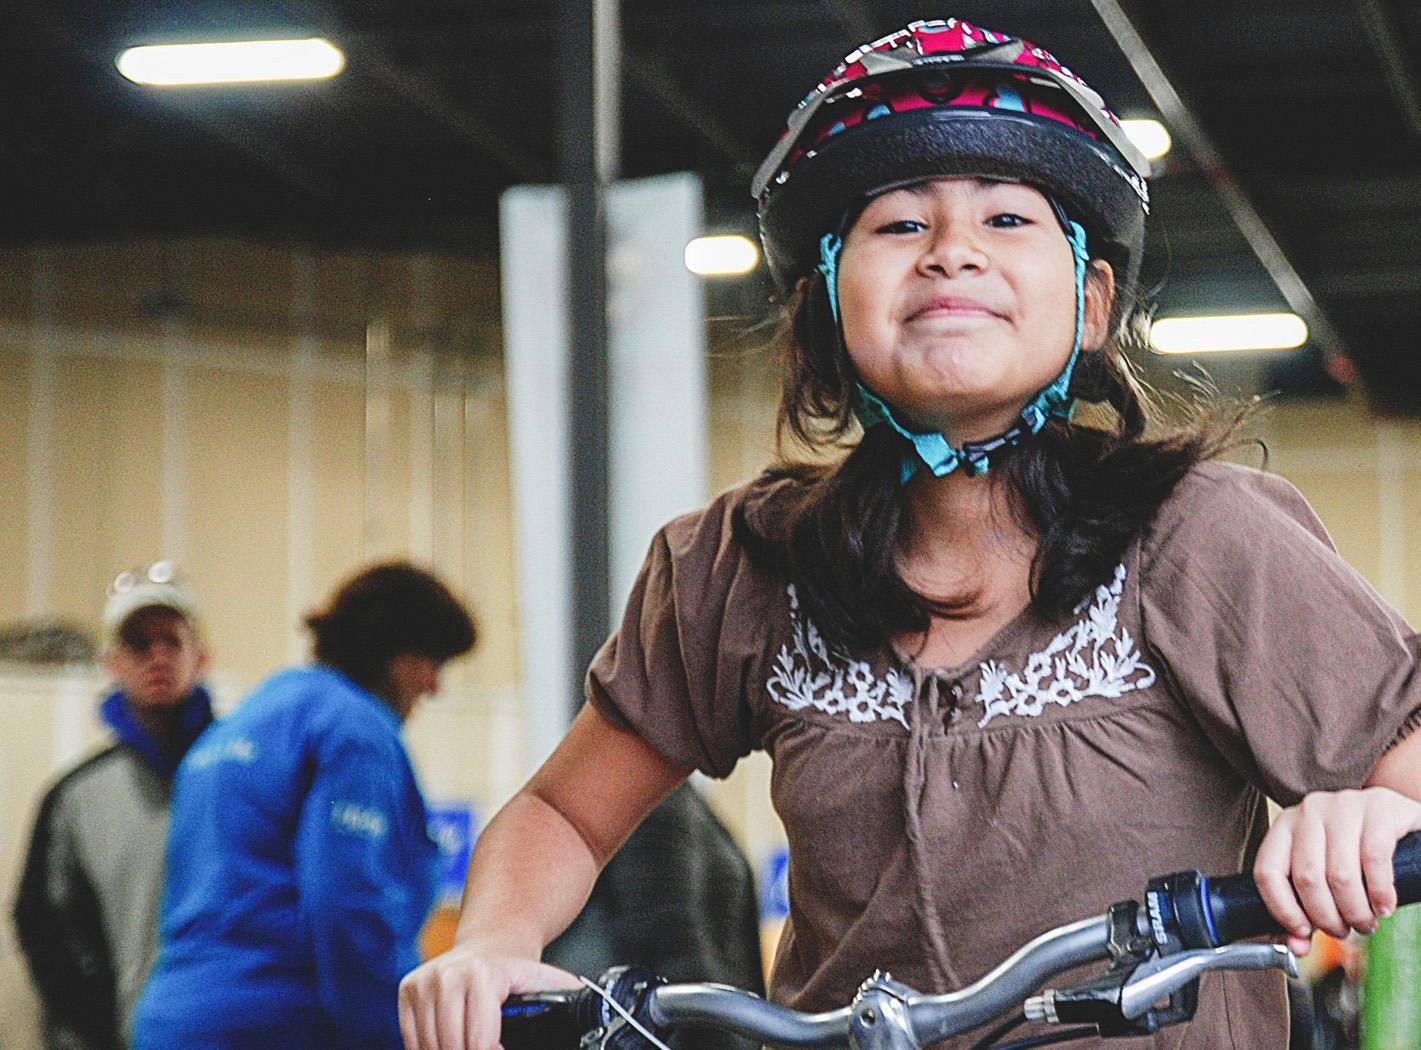 Girl on bike with helmet Free Bikes 4 Kidz Detroit